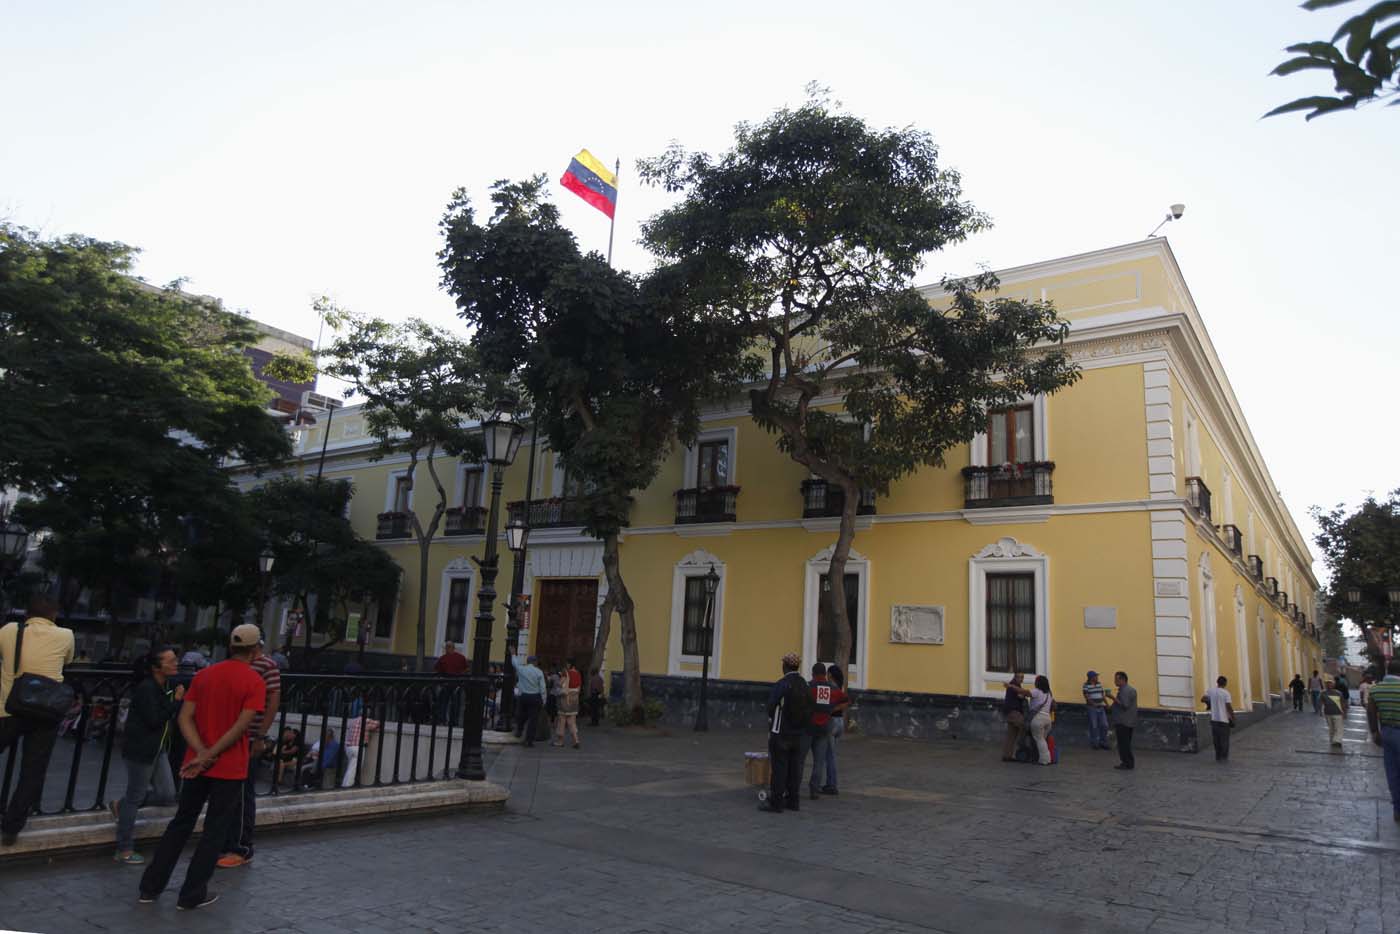 Gobierno de Maduro dice que expulsó a políticos ecuatorianos por actividades “desestabilizadoras”